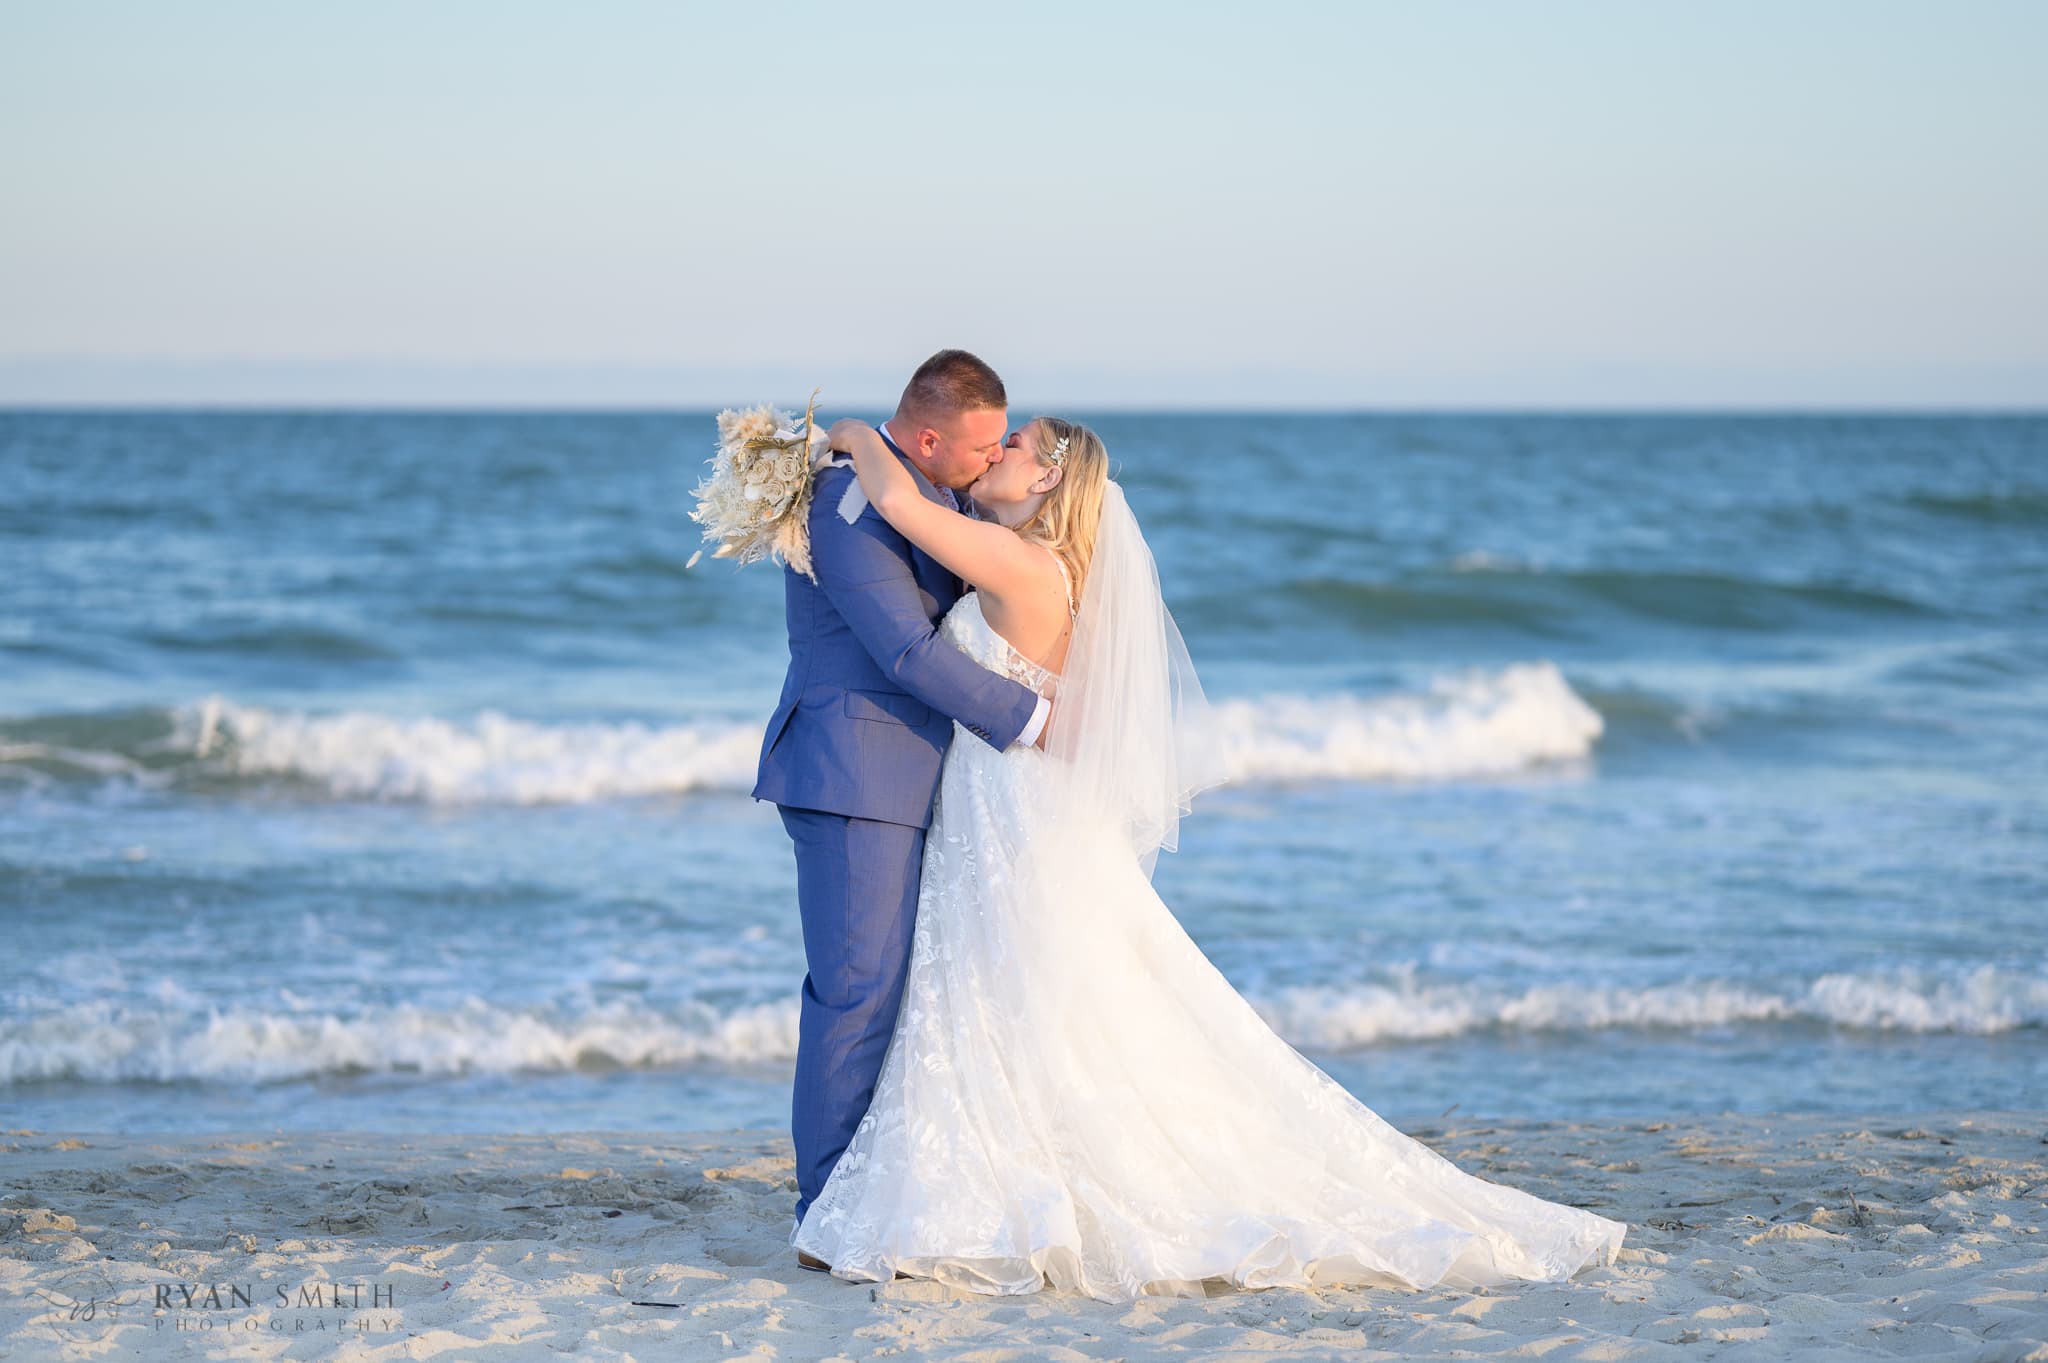 Kiss in front of the ocean - North Beach Resort & Villas